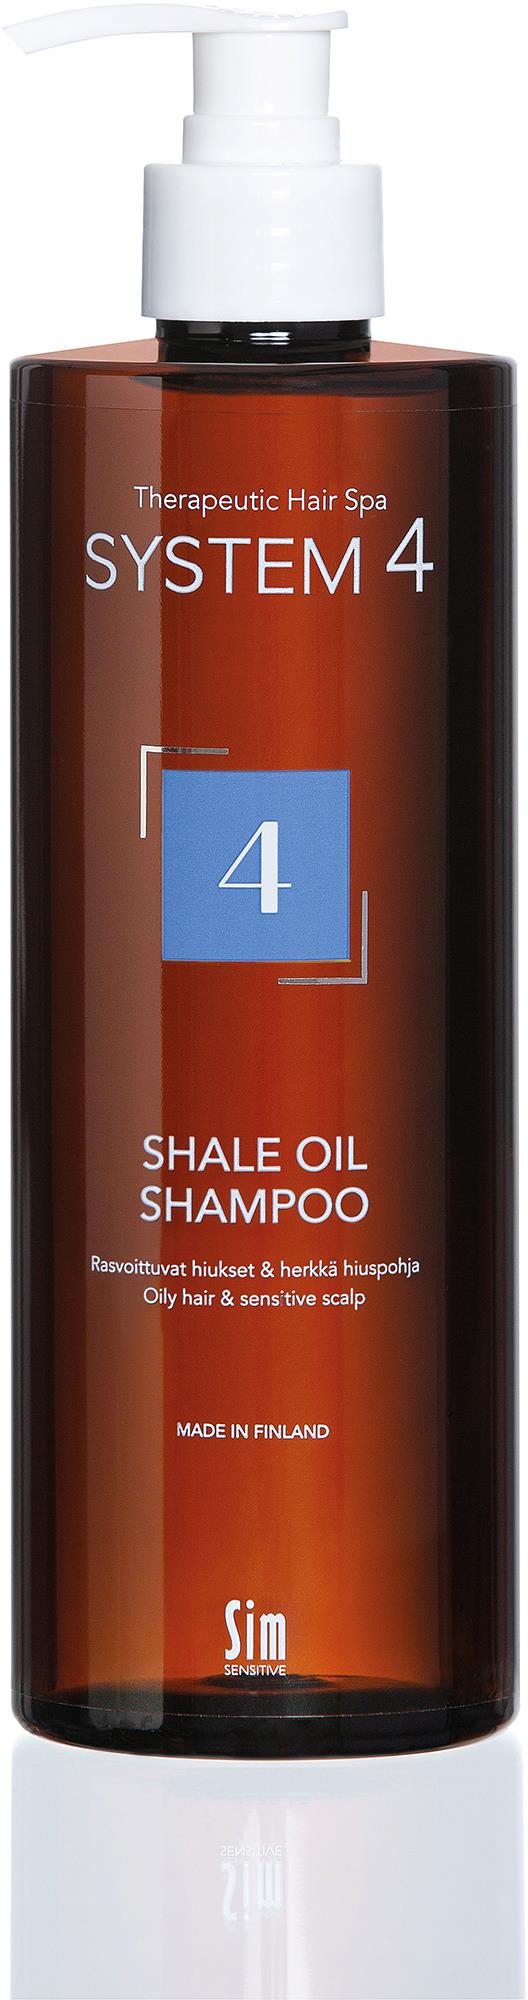 Sim Sensitive 4 4 Shale Oil Shampoo 500 ml | lyko.com